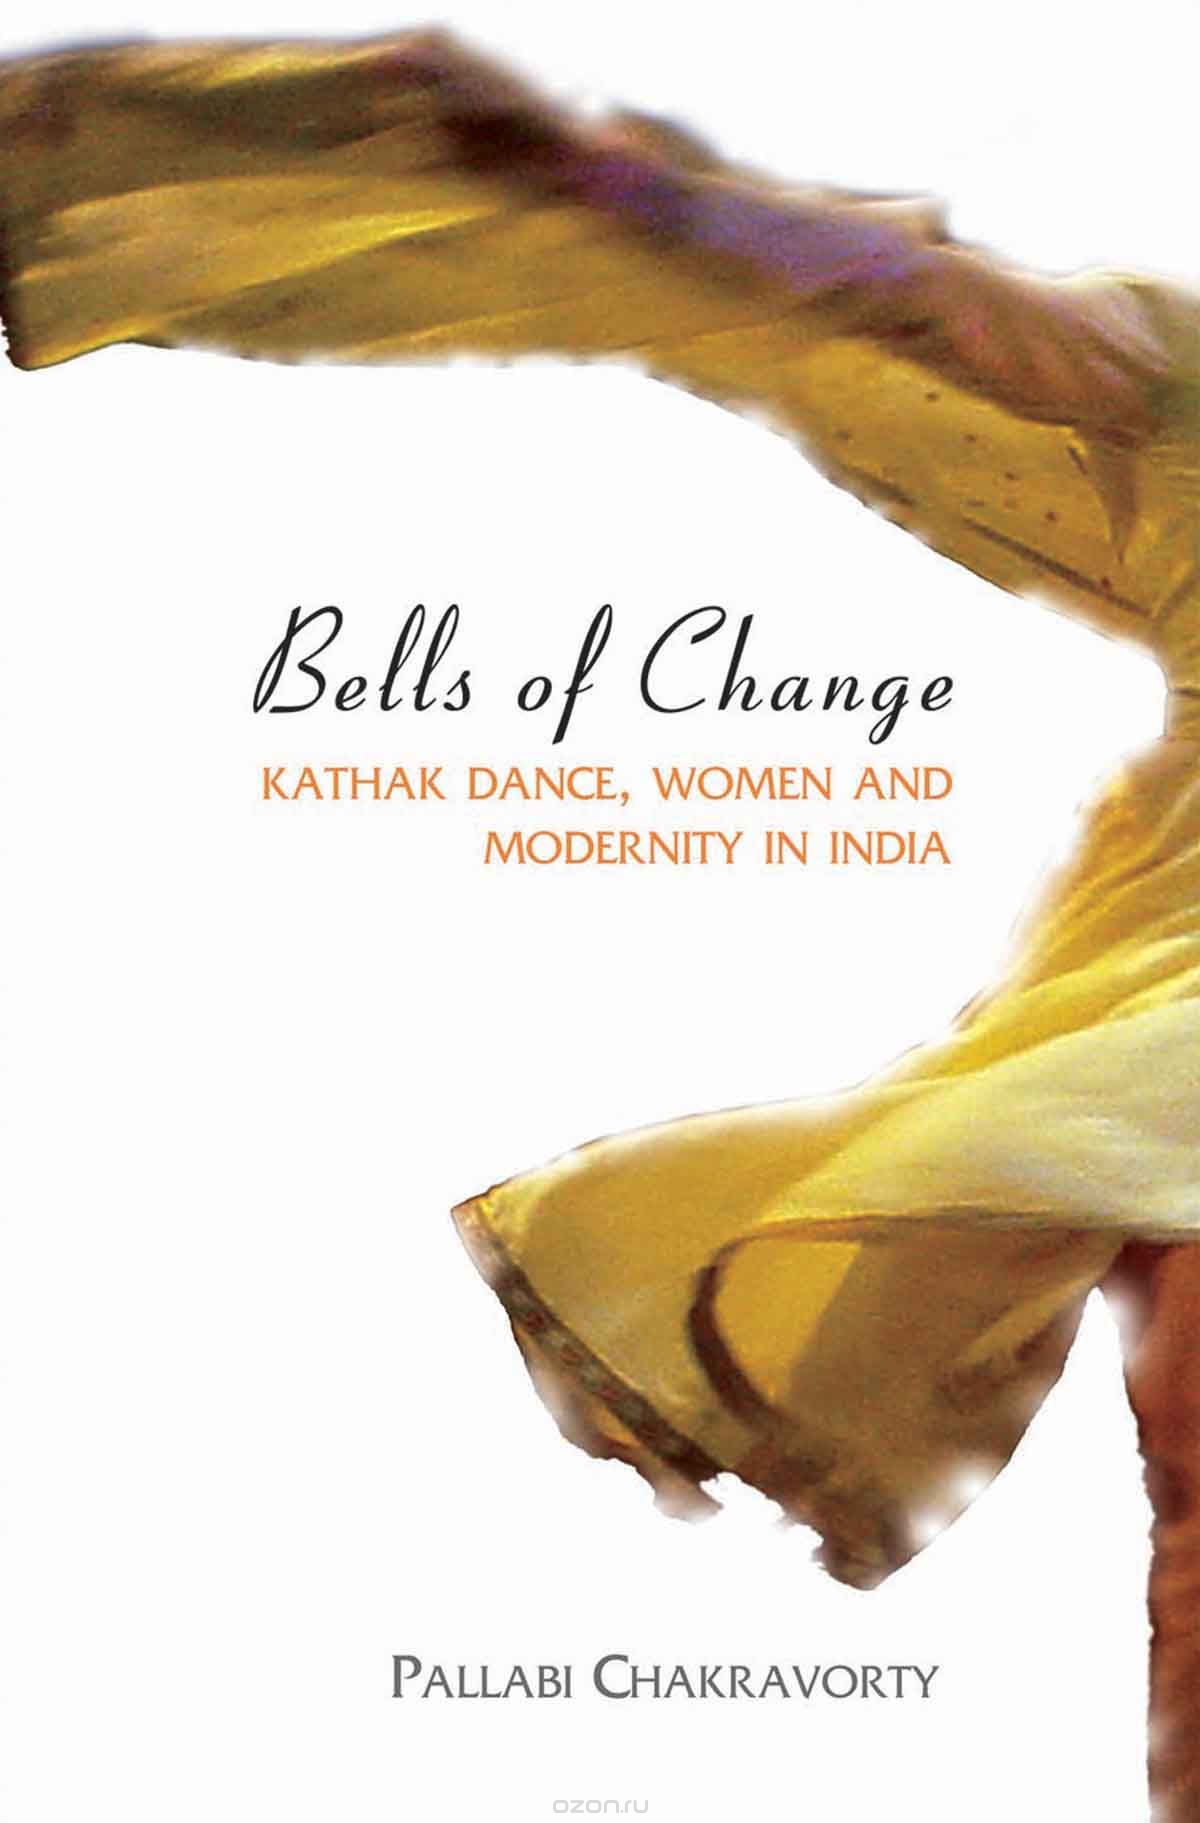 Скачать книгу "Bells of Change – Kathak Dance, Women and Modernity In India"